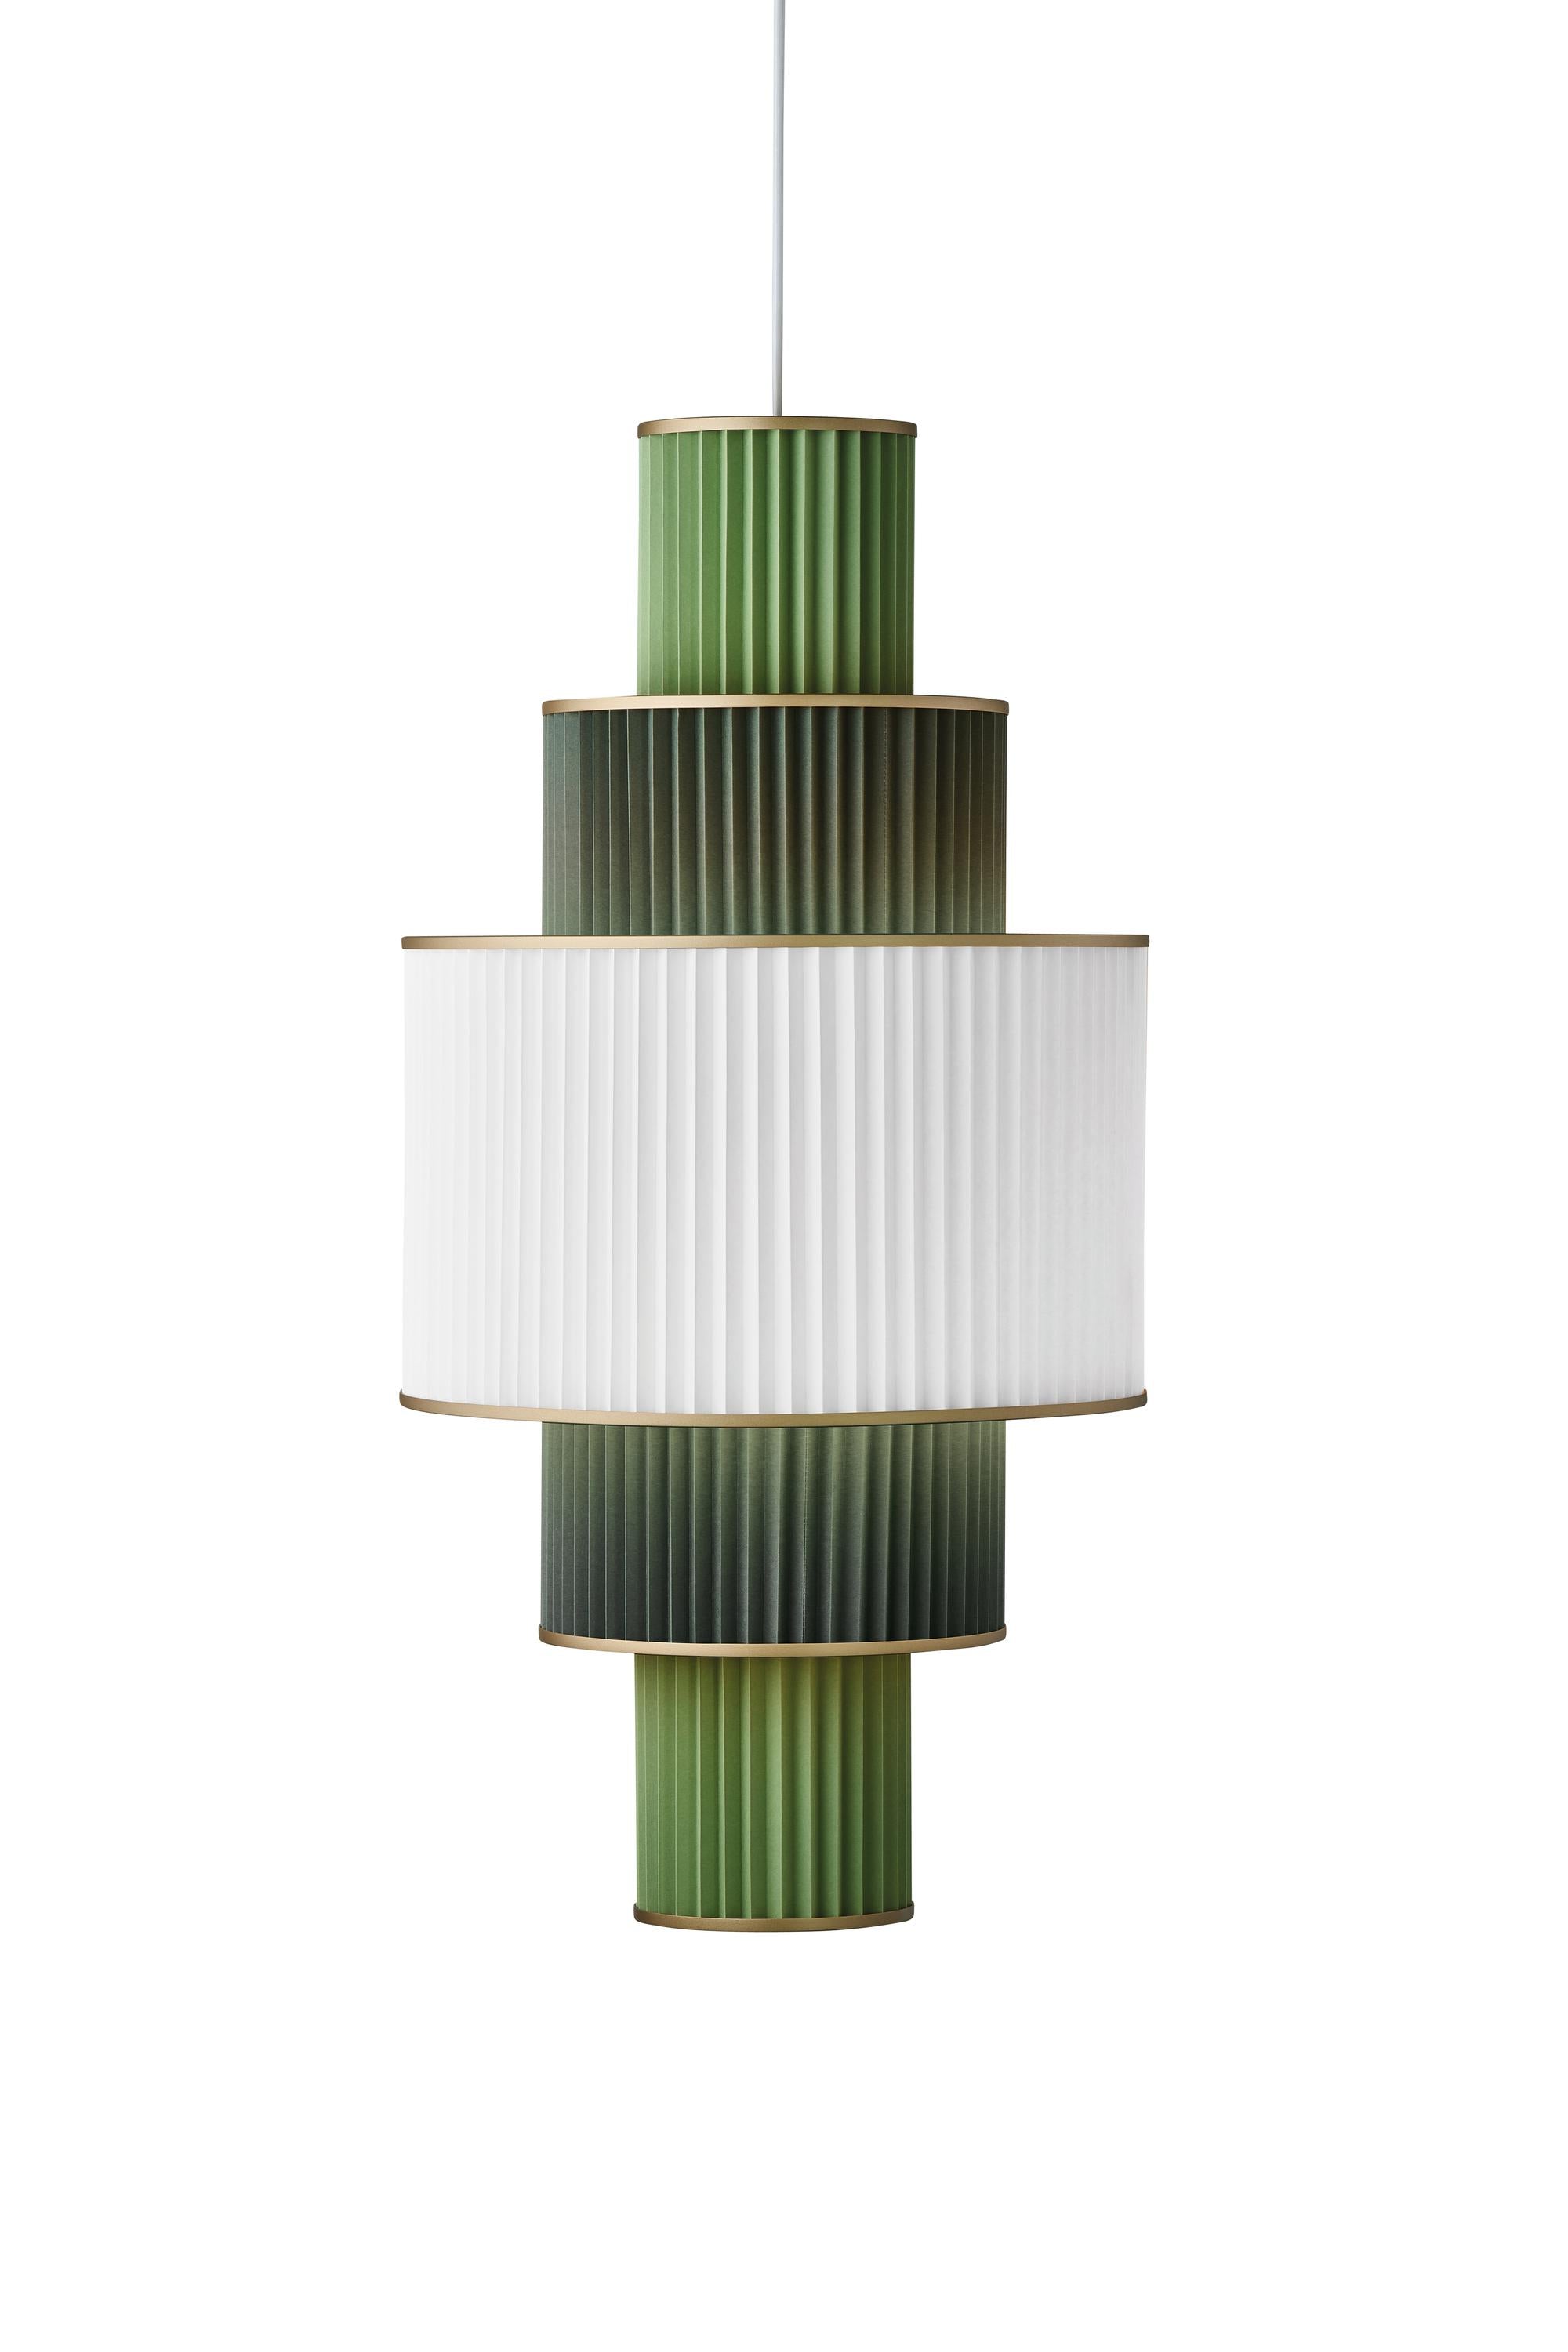 Le Klint Plivello Pendant Golden/White/Light Green med 5 skärmar (S-M-L-M-S)